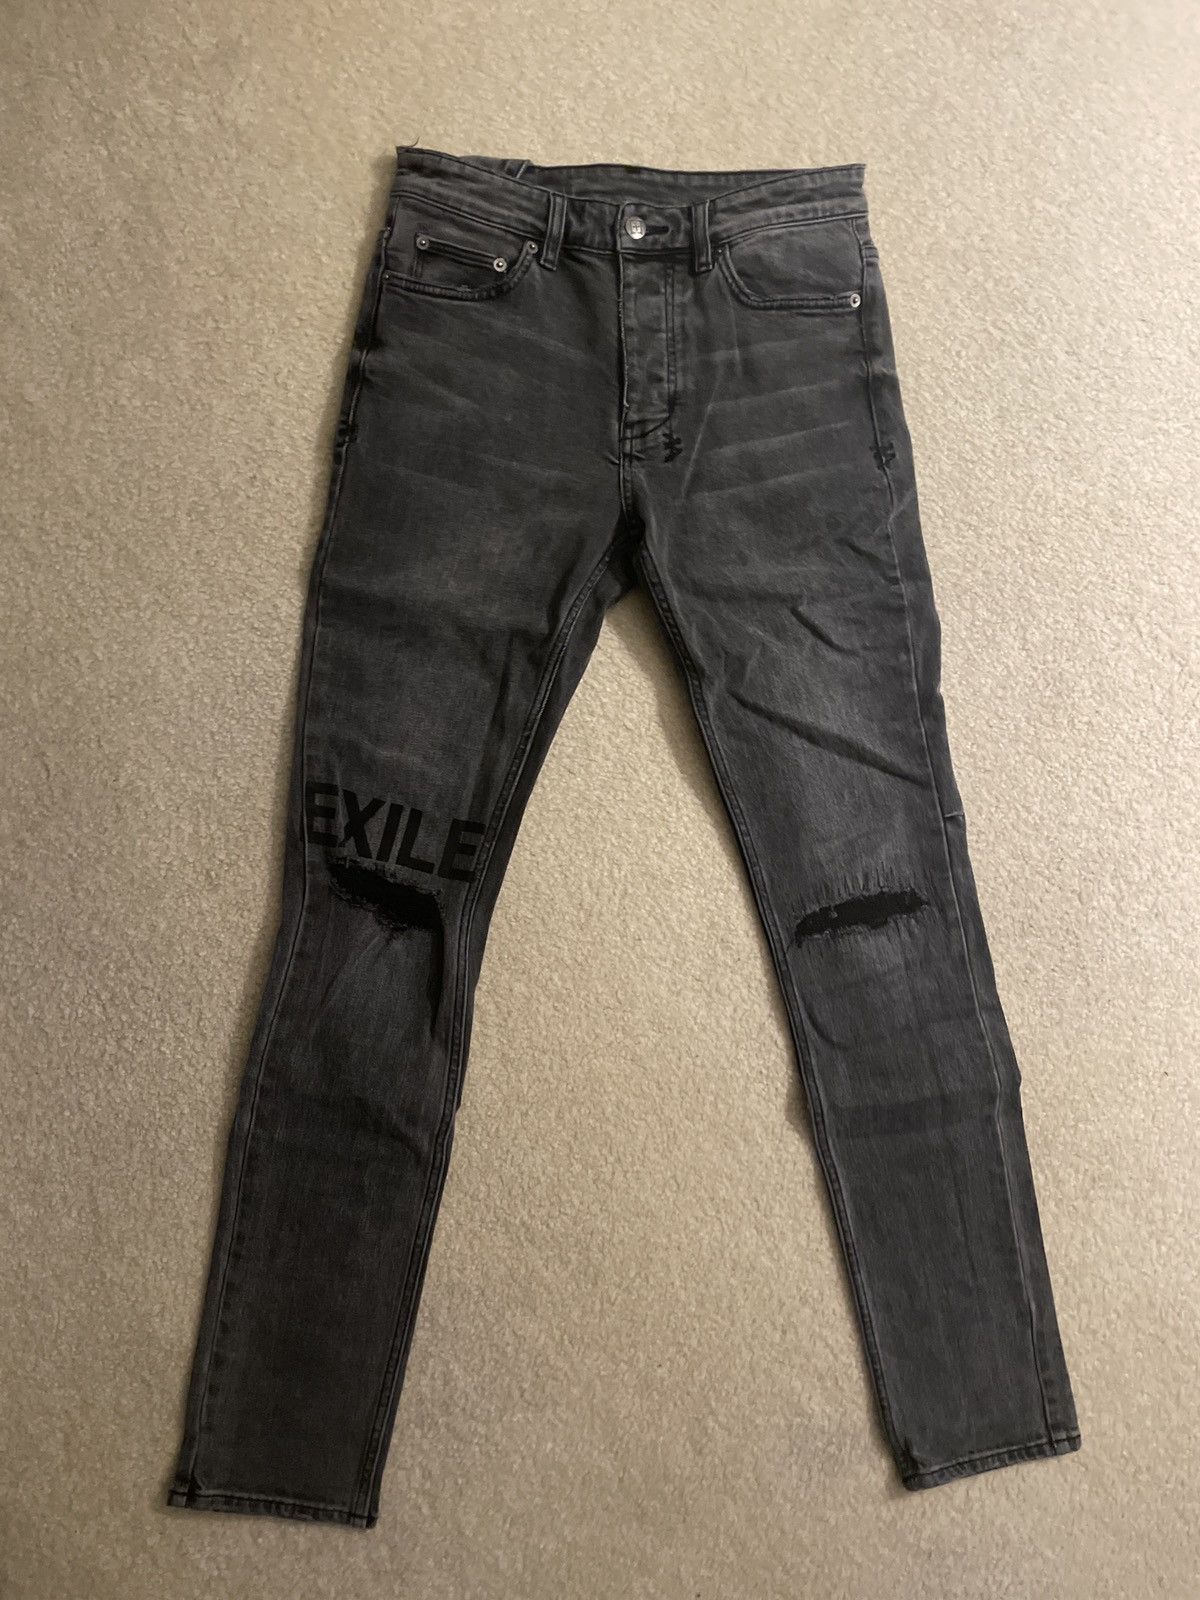 Ksubi Ksubi Jeans (chitch exile trashed) FINAL PRICE DROP | Grailed